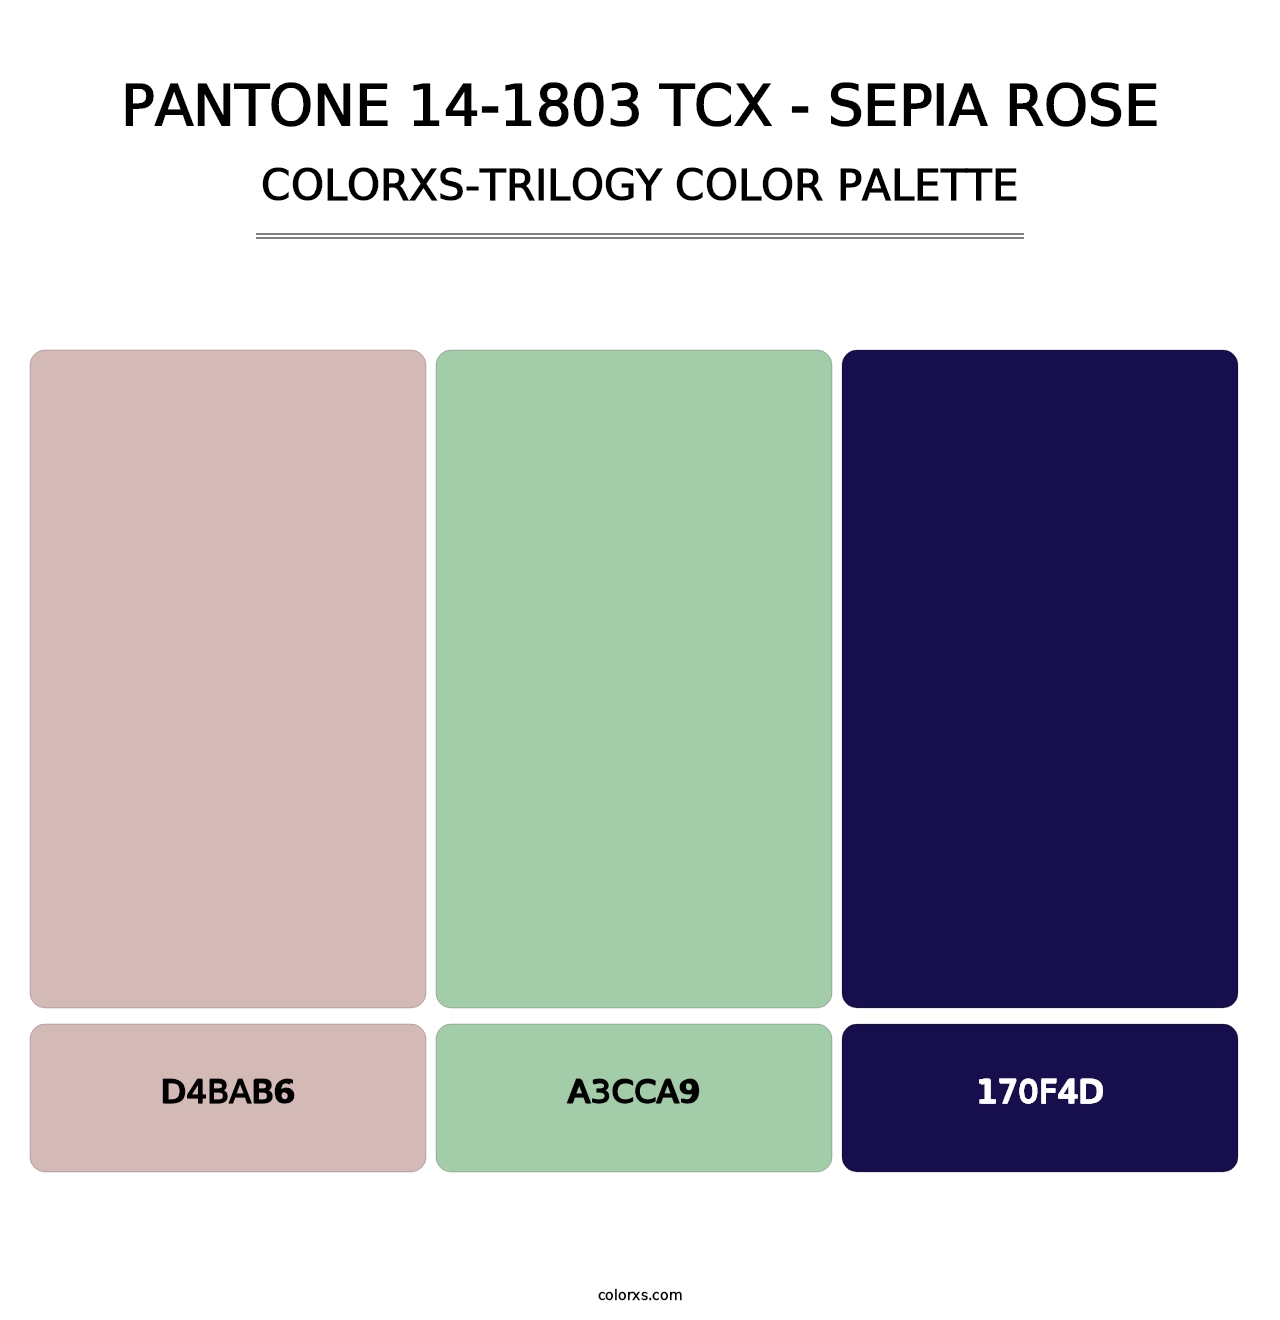 PANTONE 14-1803 TCX - Sepia Rose - Colorxs Trilogy Palette